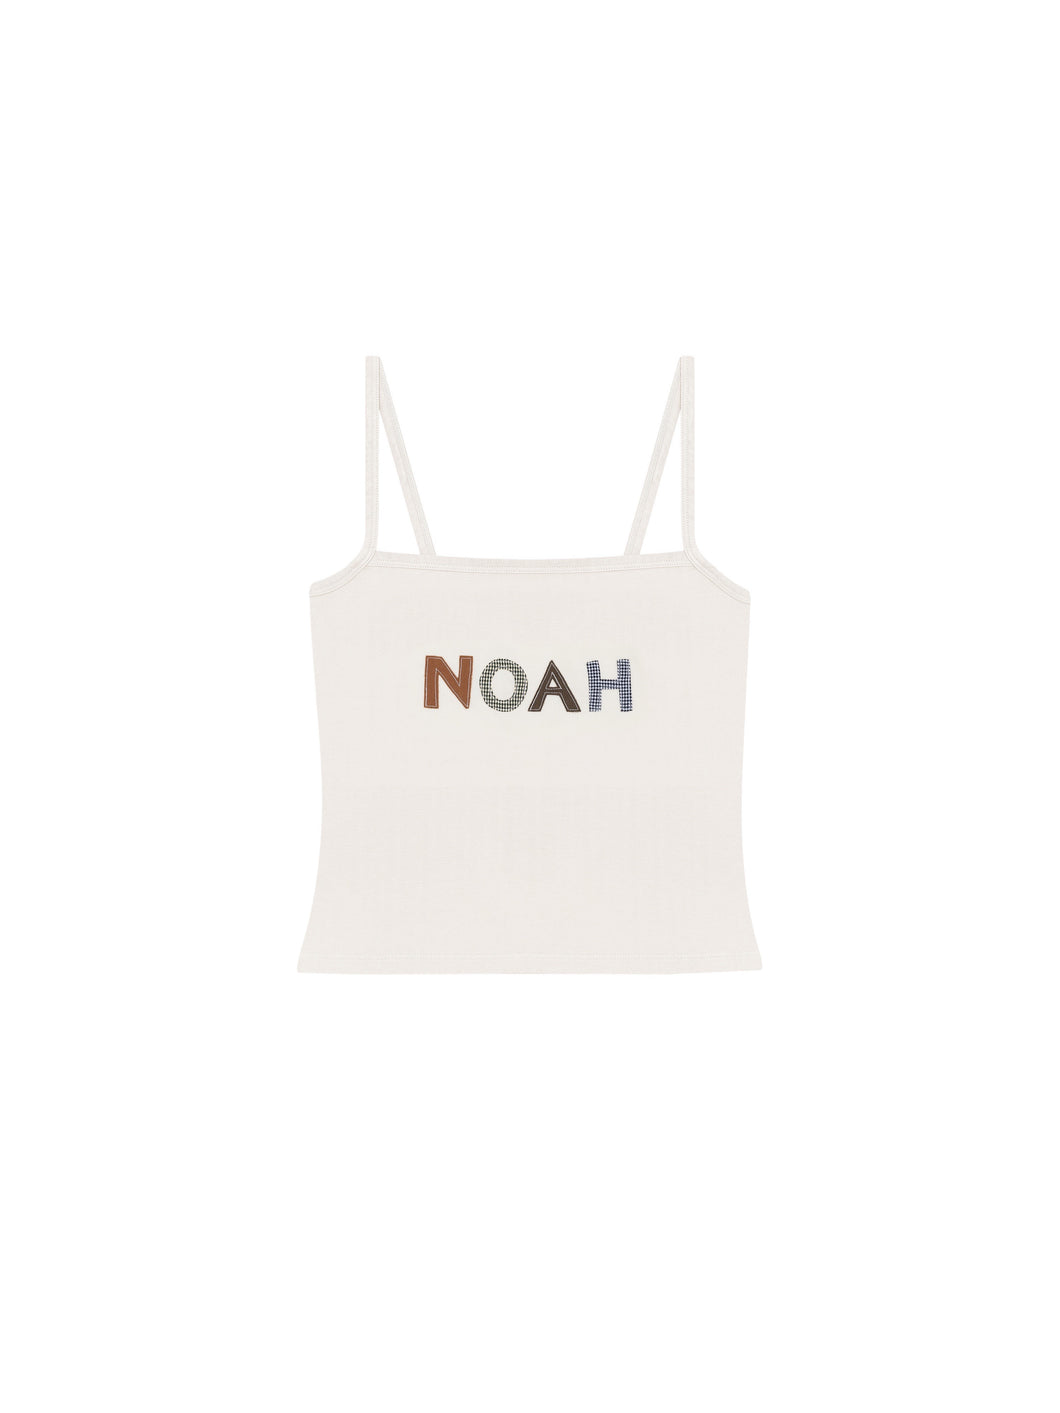 NOAH Tank Top